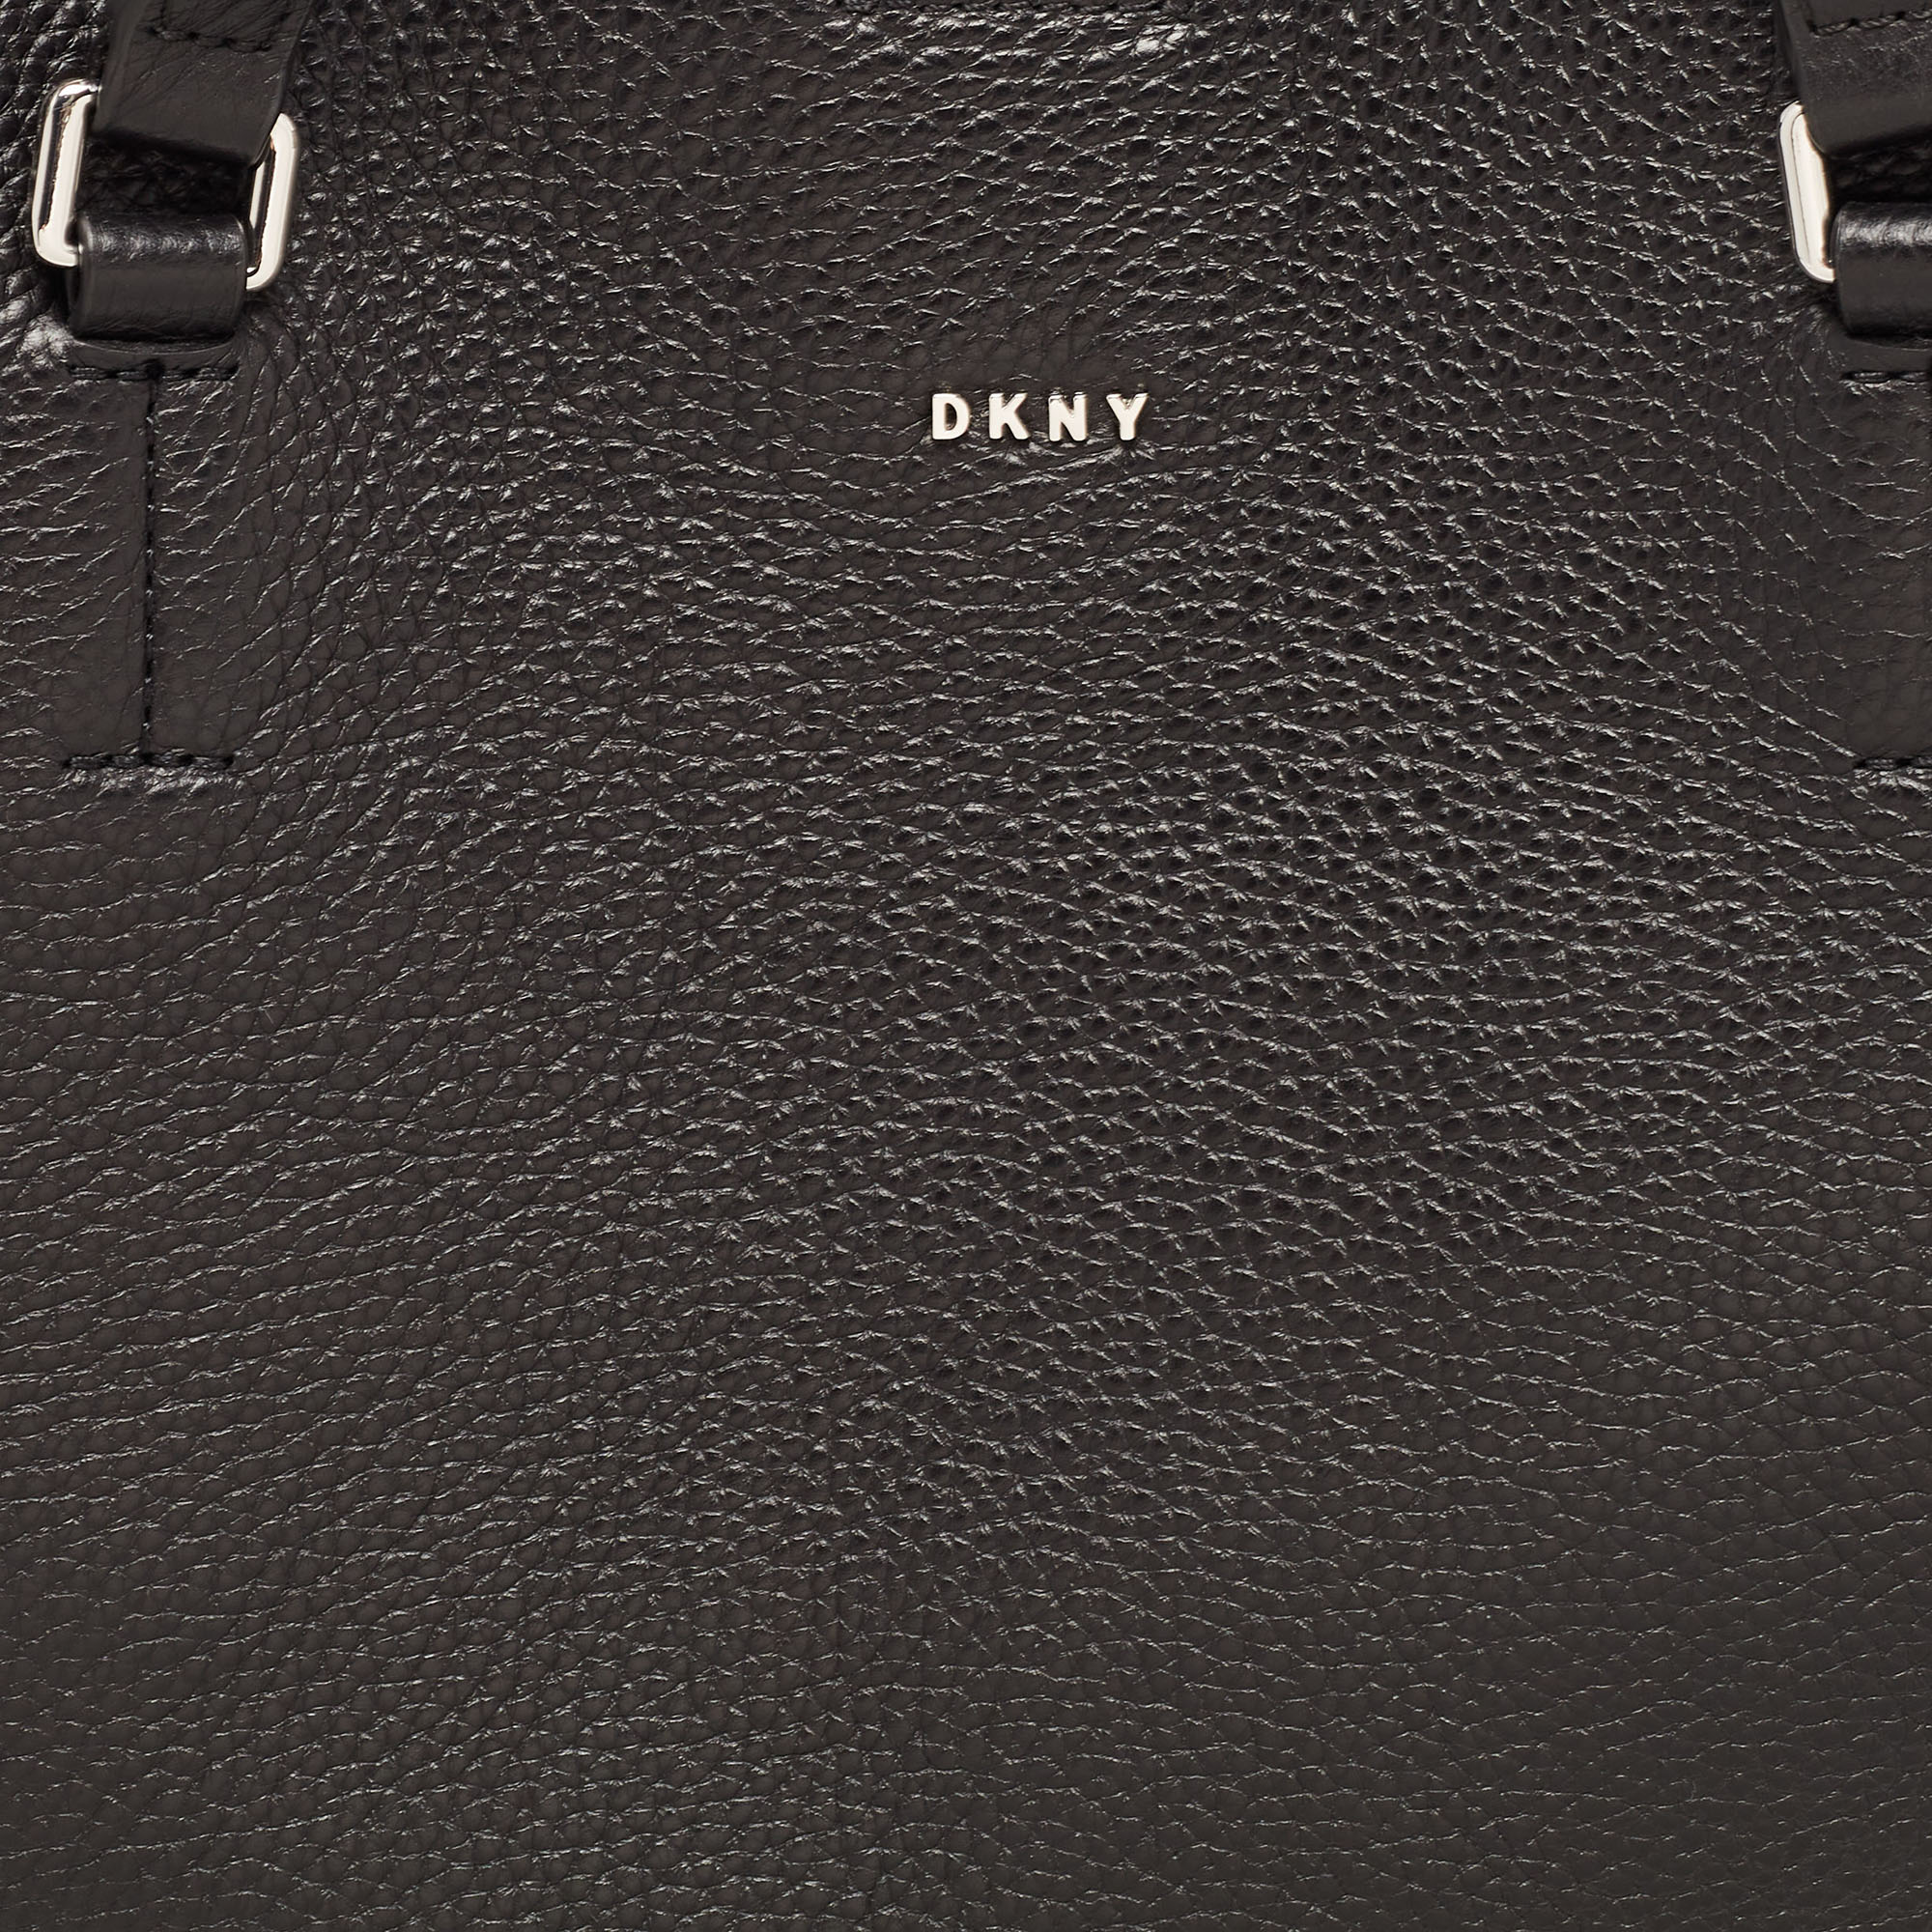 DKNY Black Leather Bryant Park Double Zip Shopper Tote